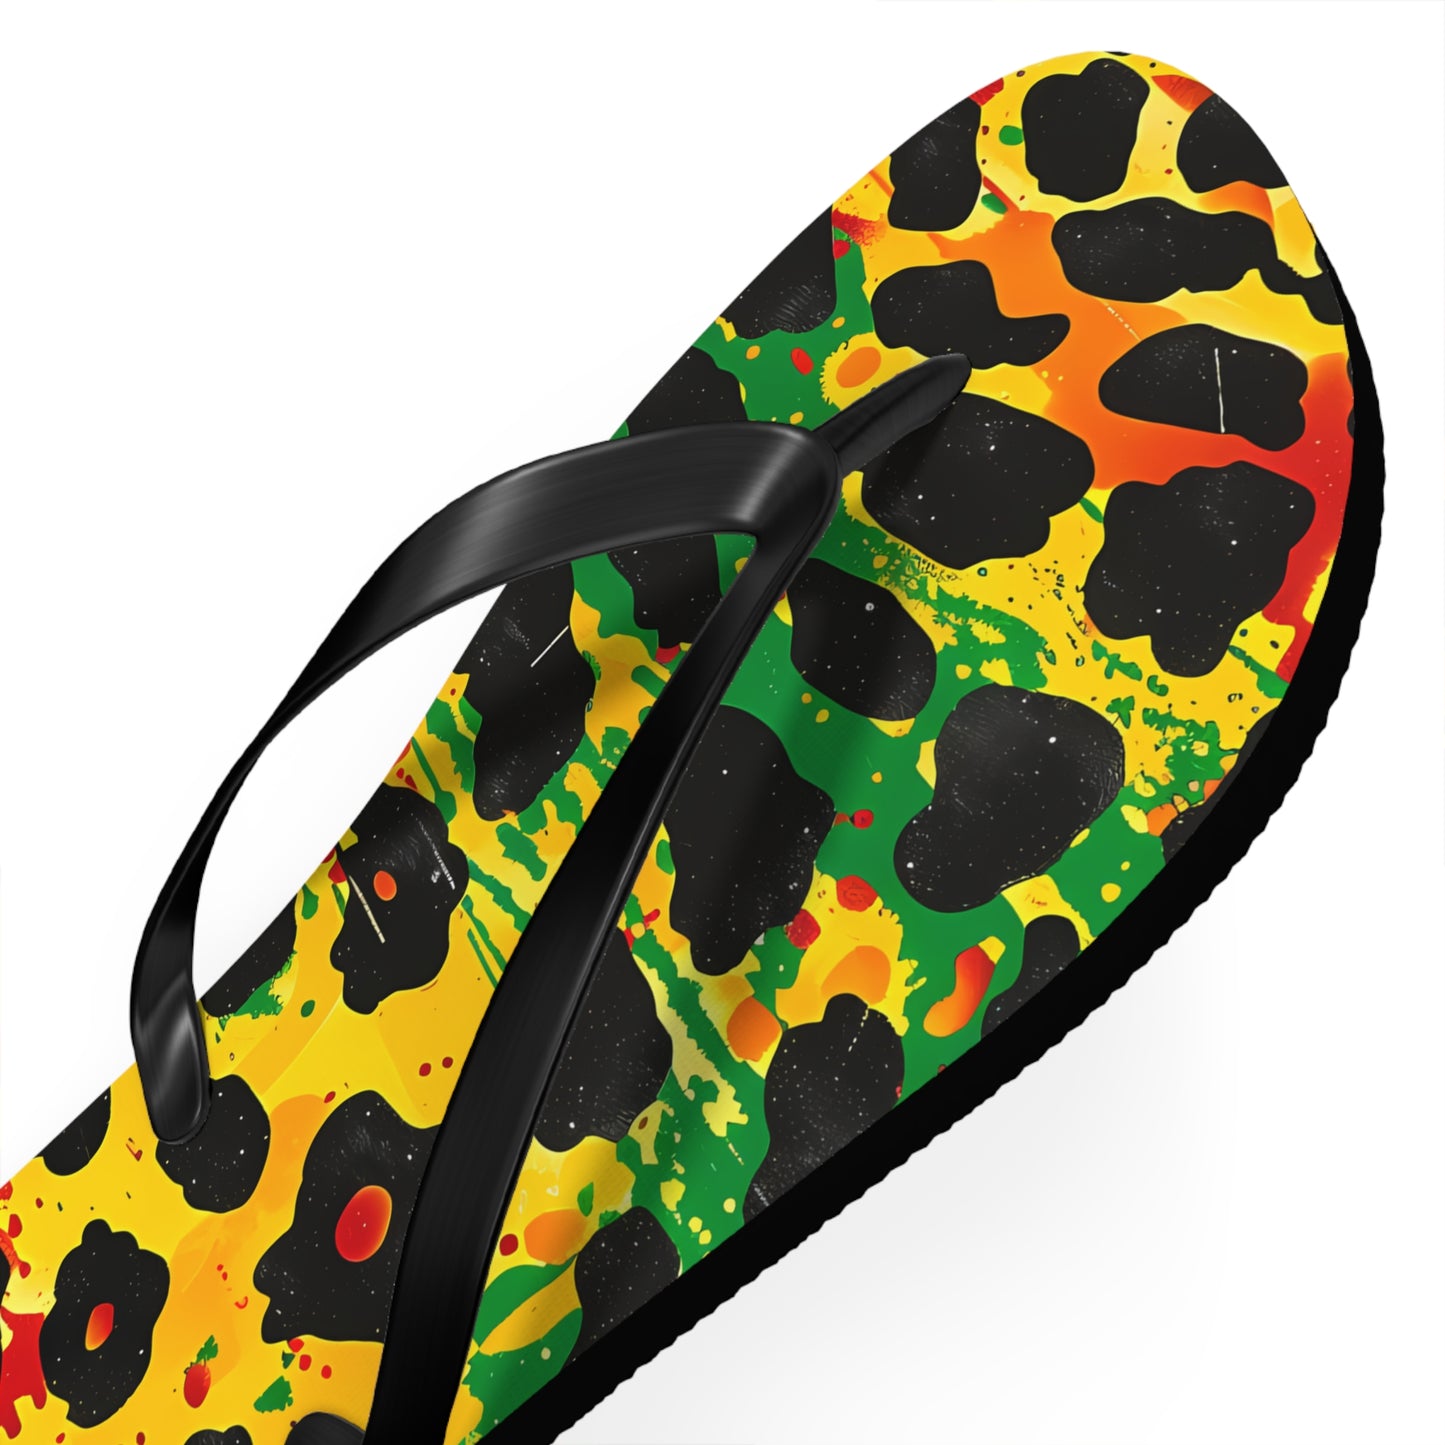 Leopard Flip Flops